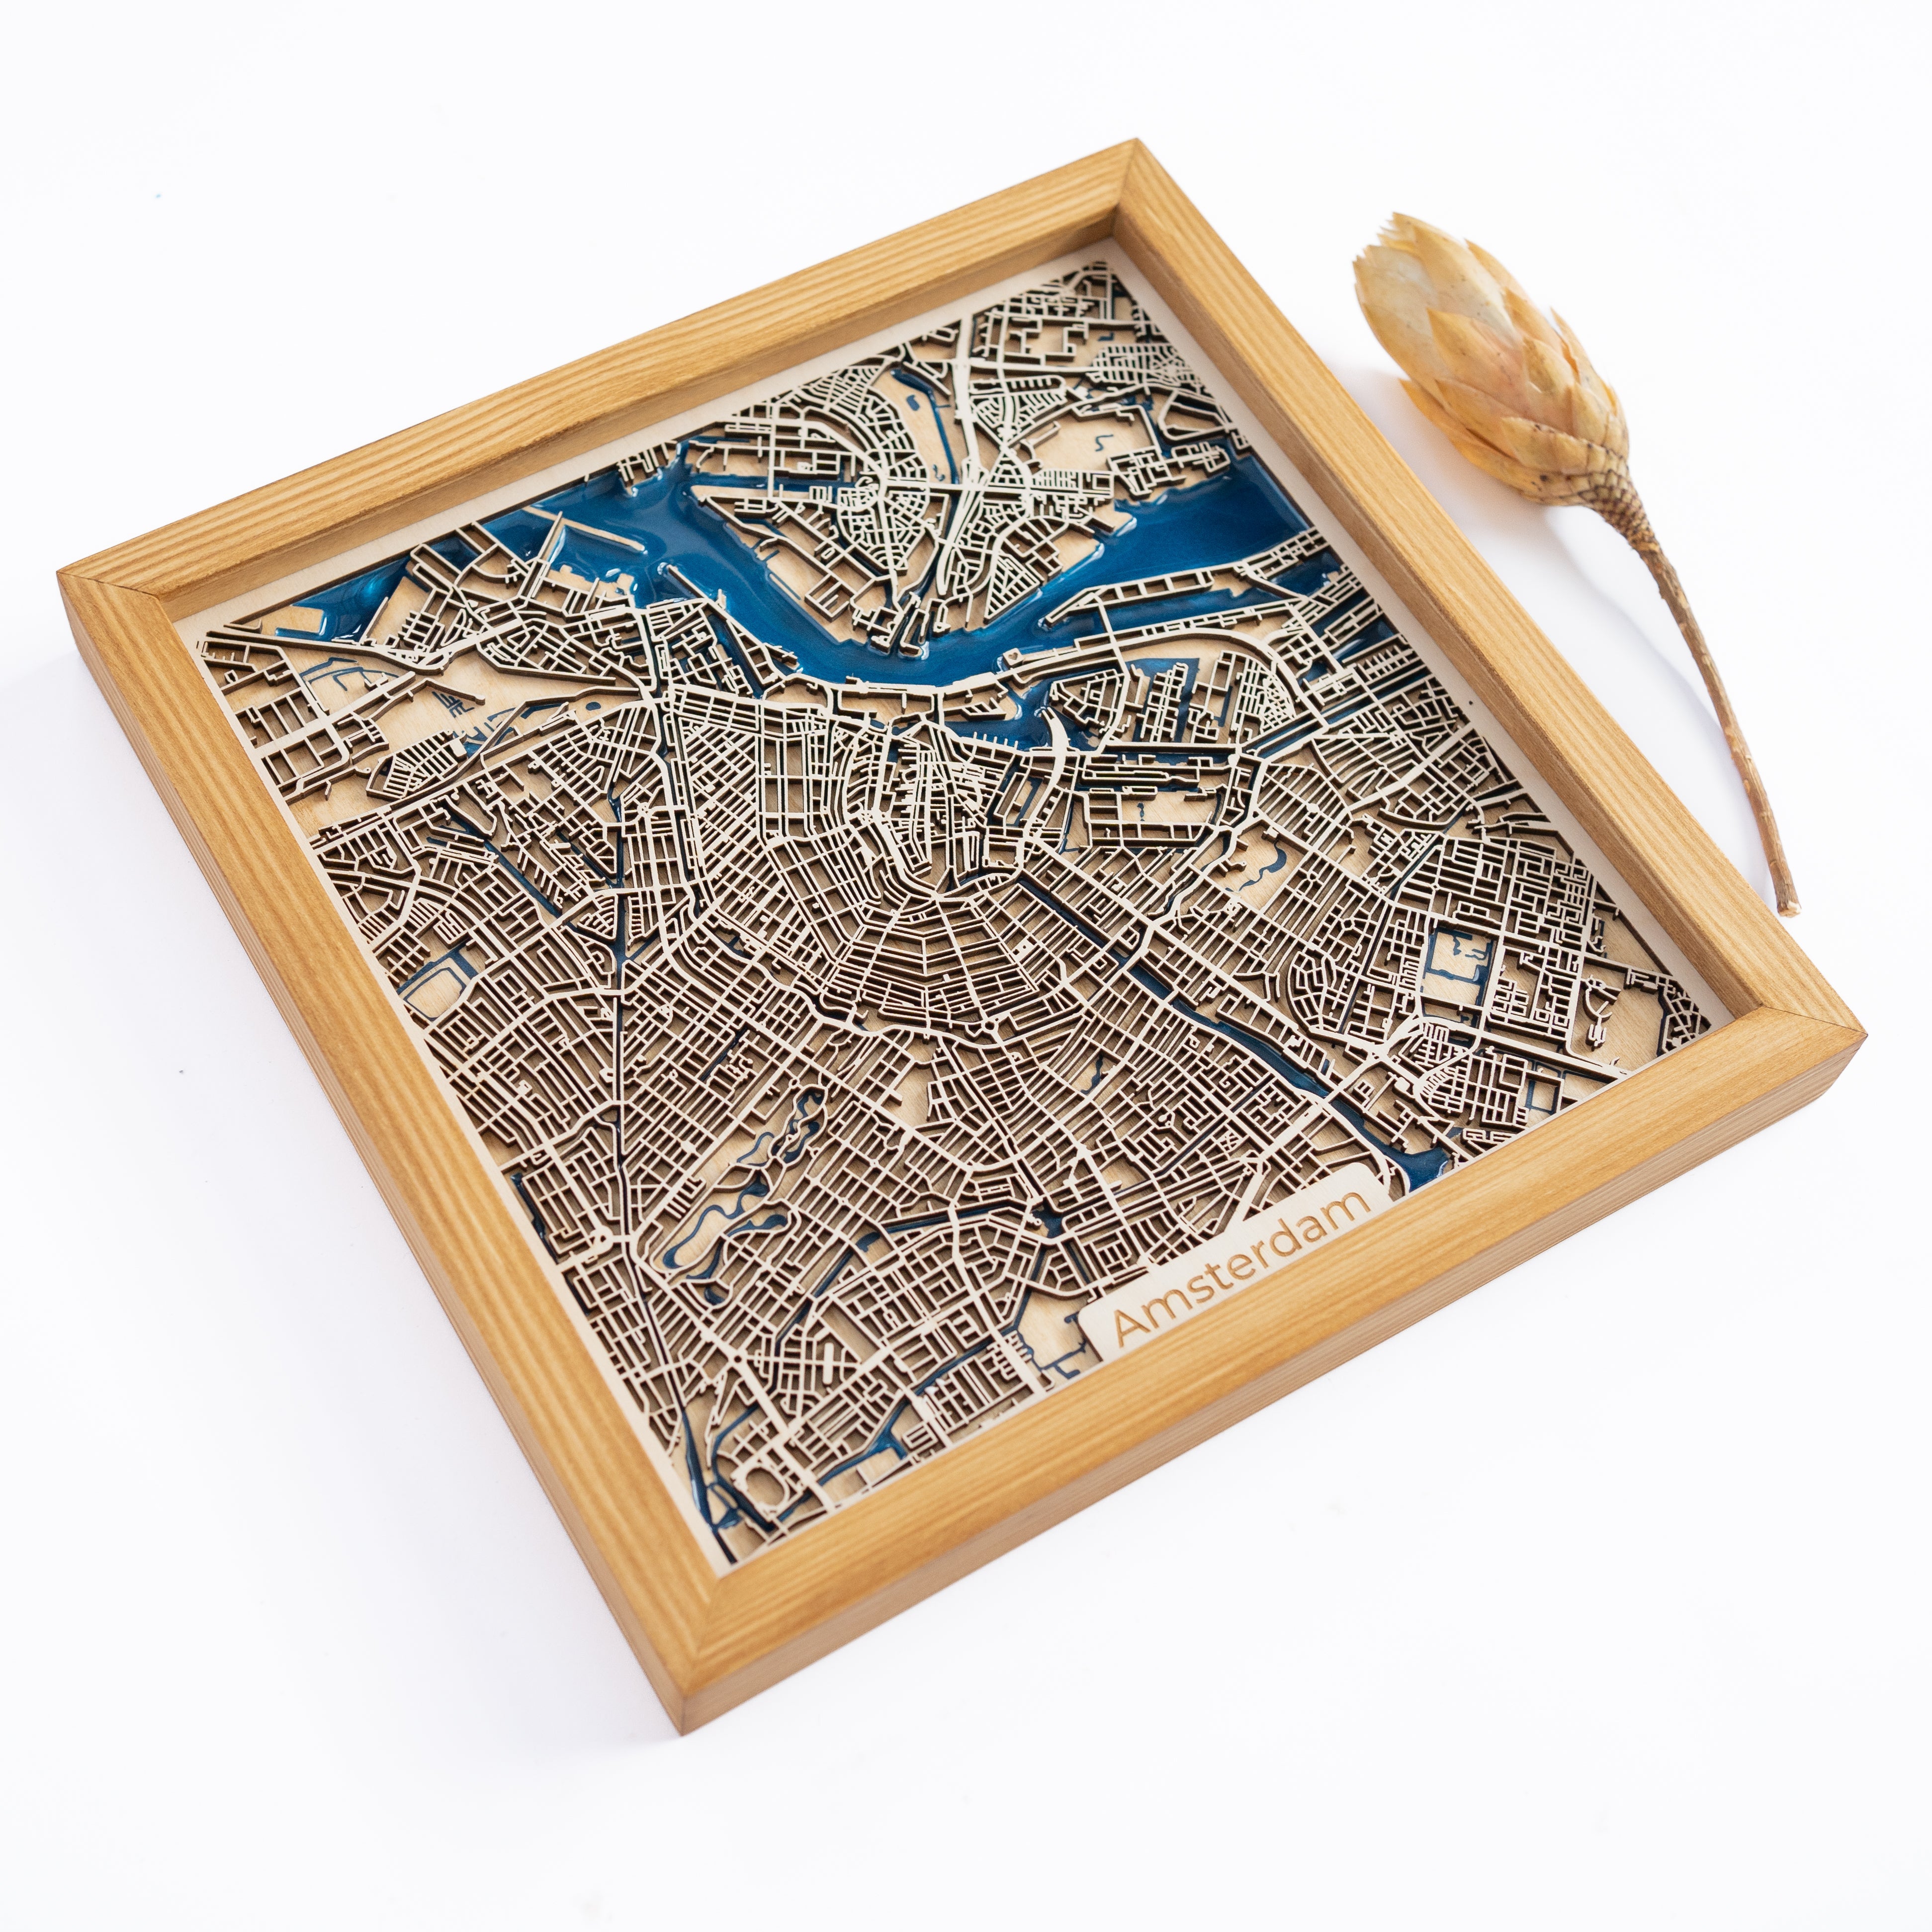 Amsterdam wooden map